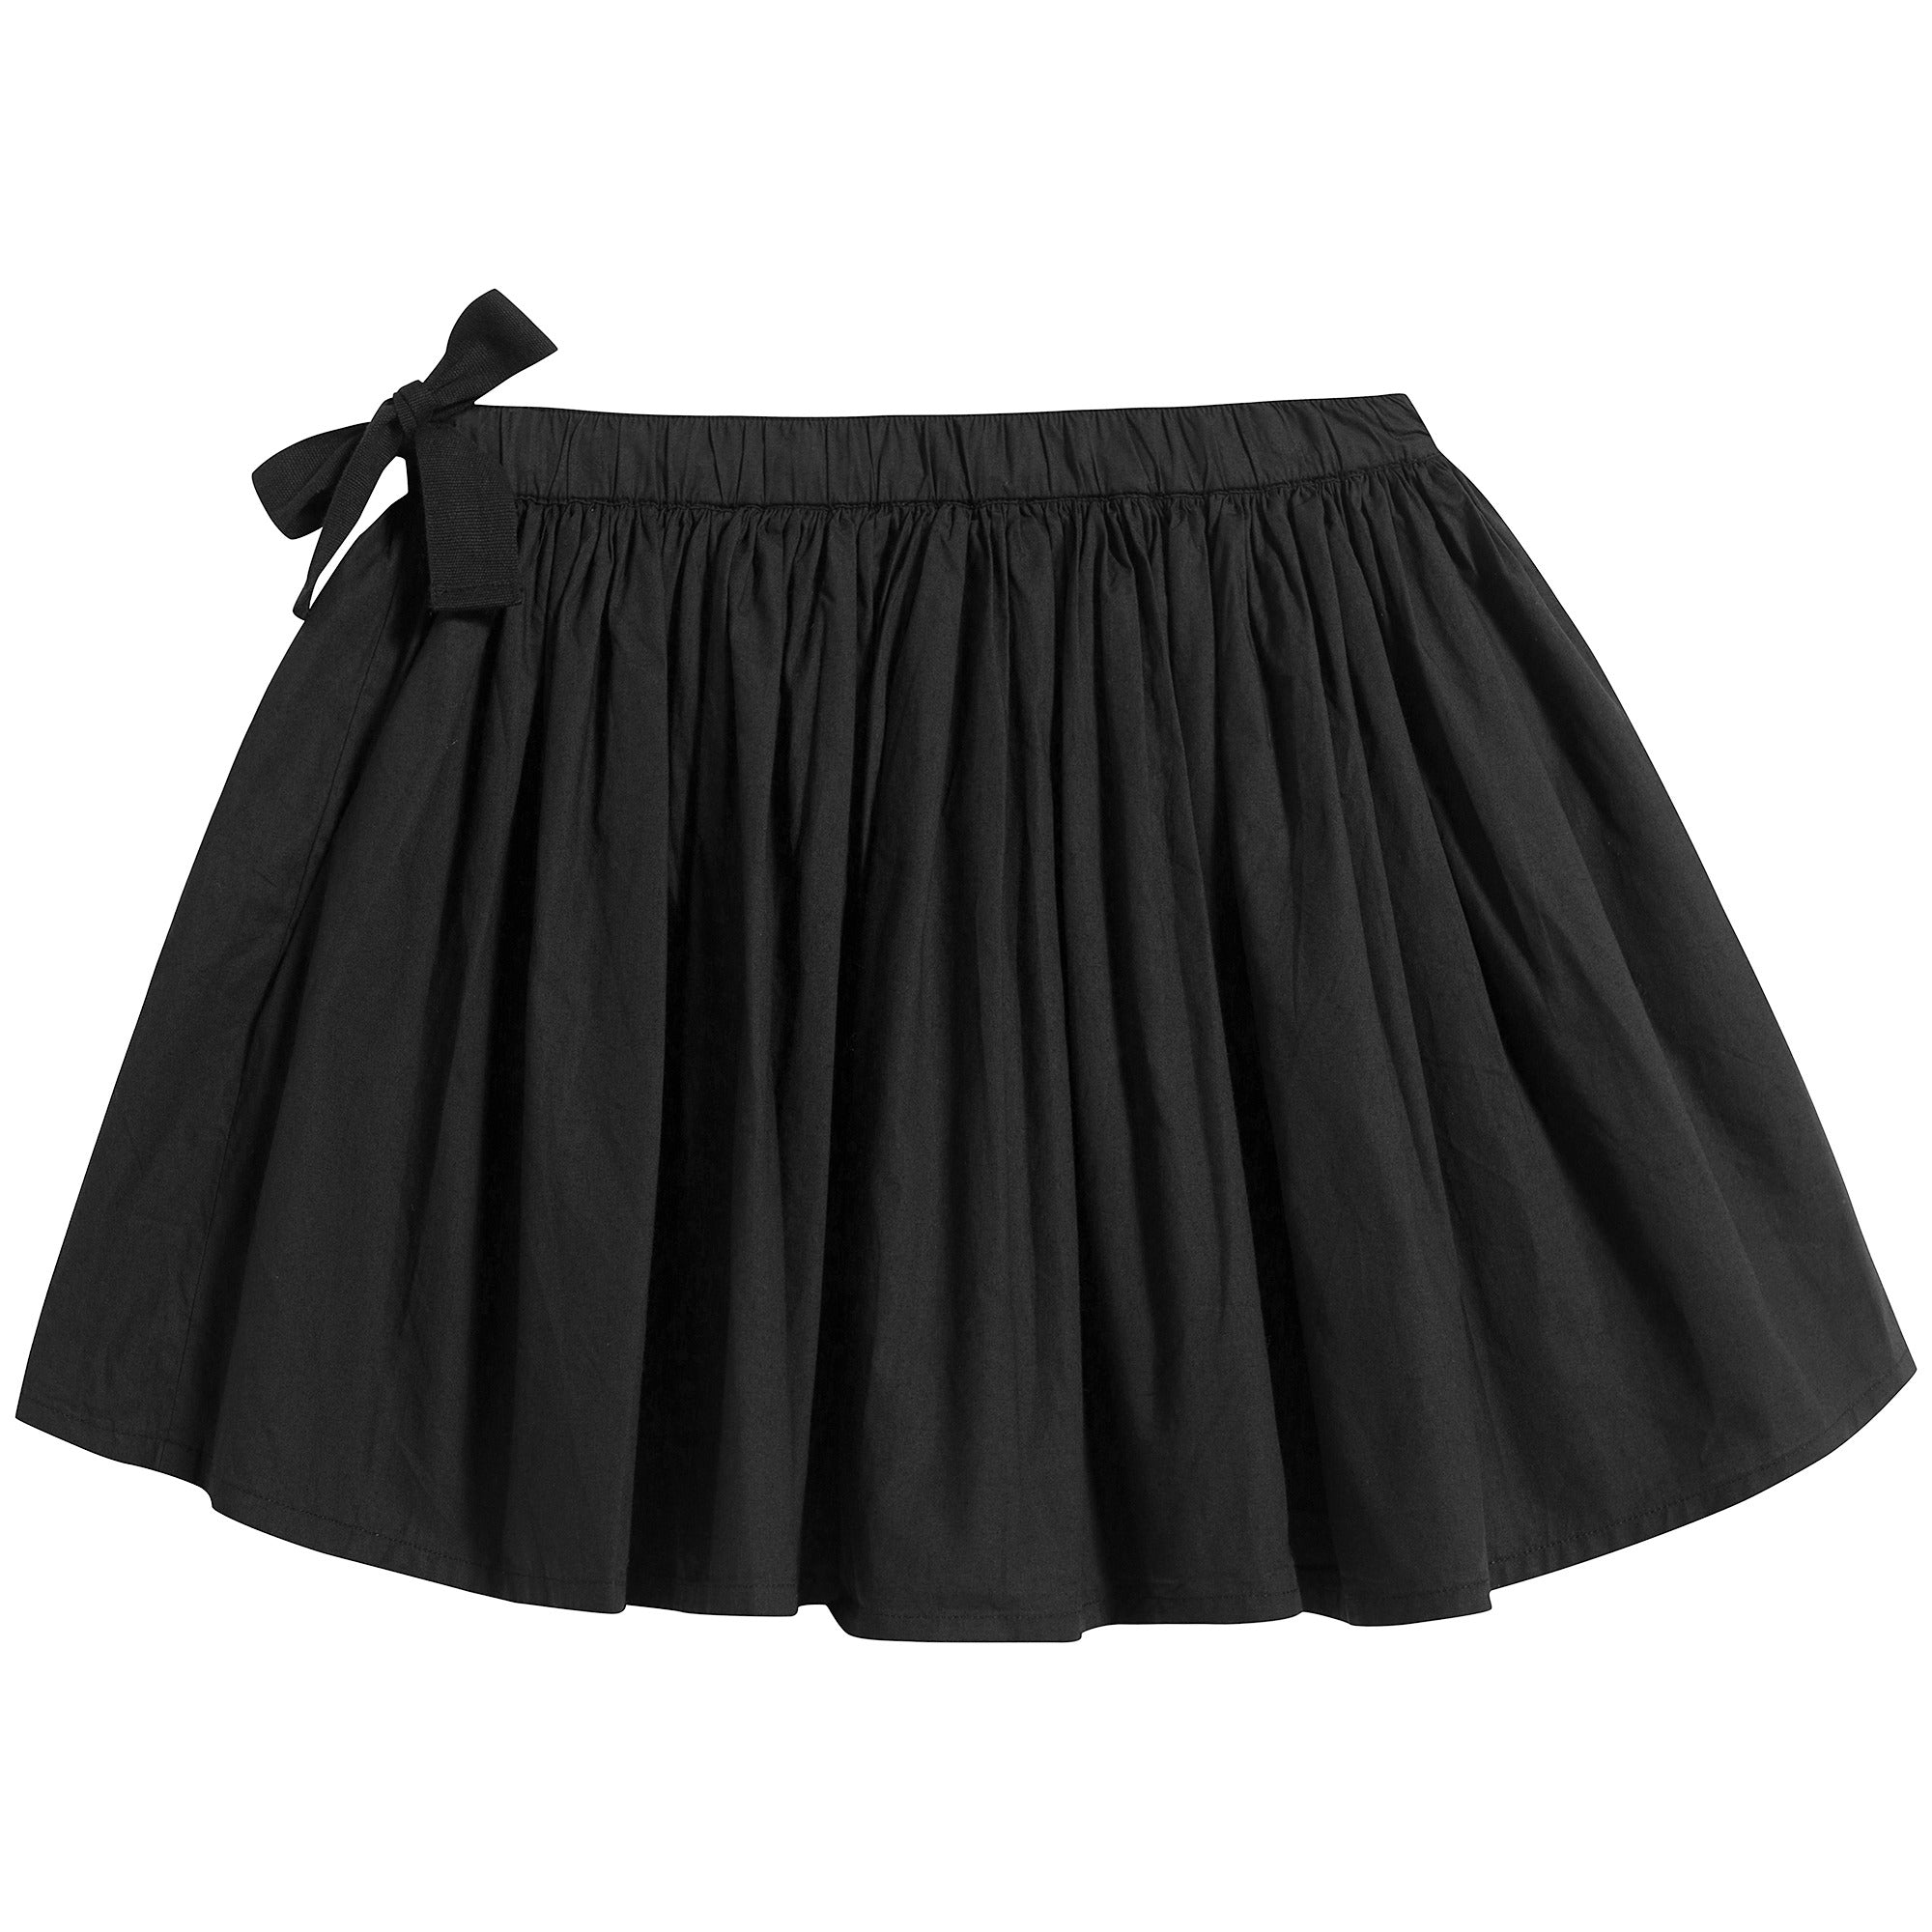 Girls Black Cotton Dress